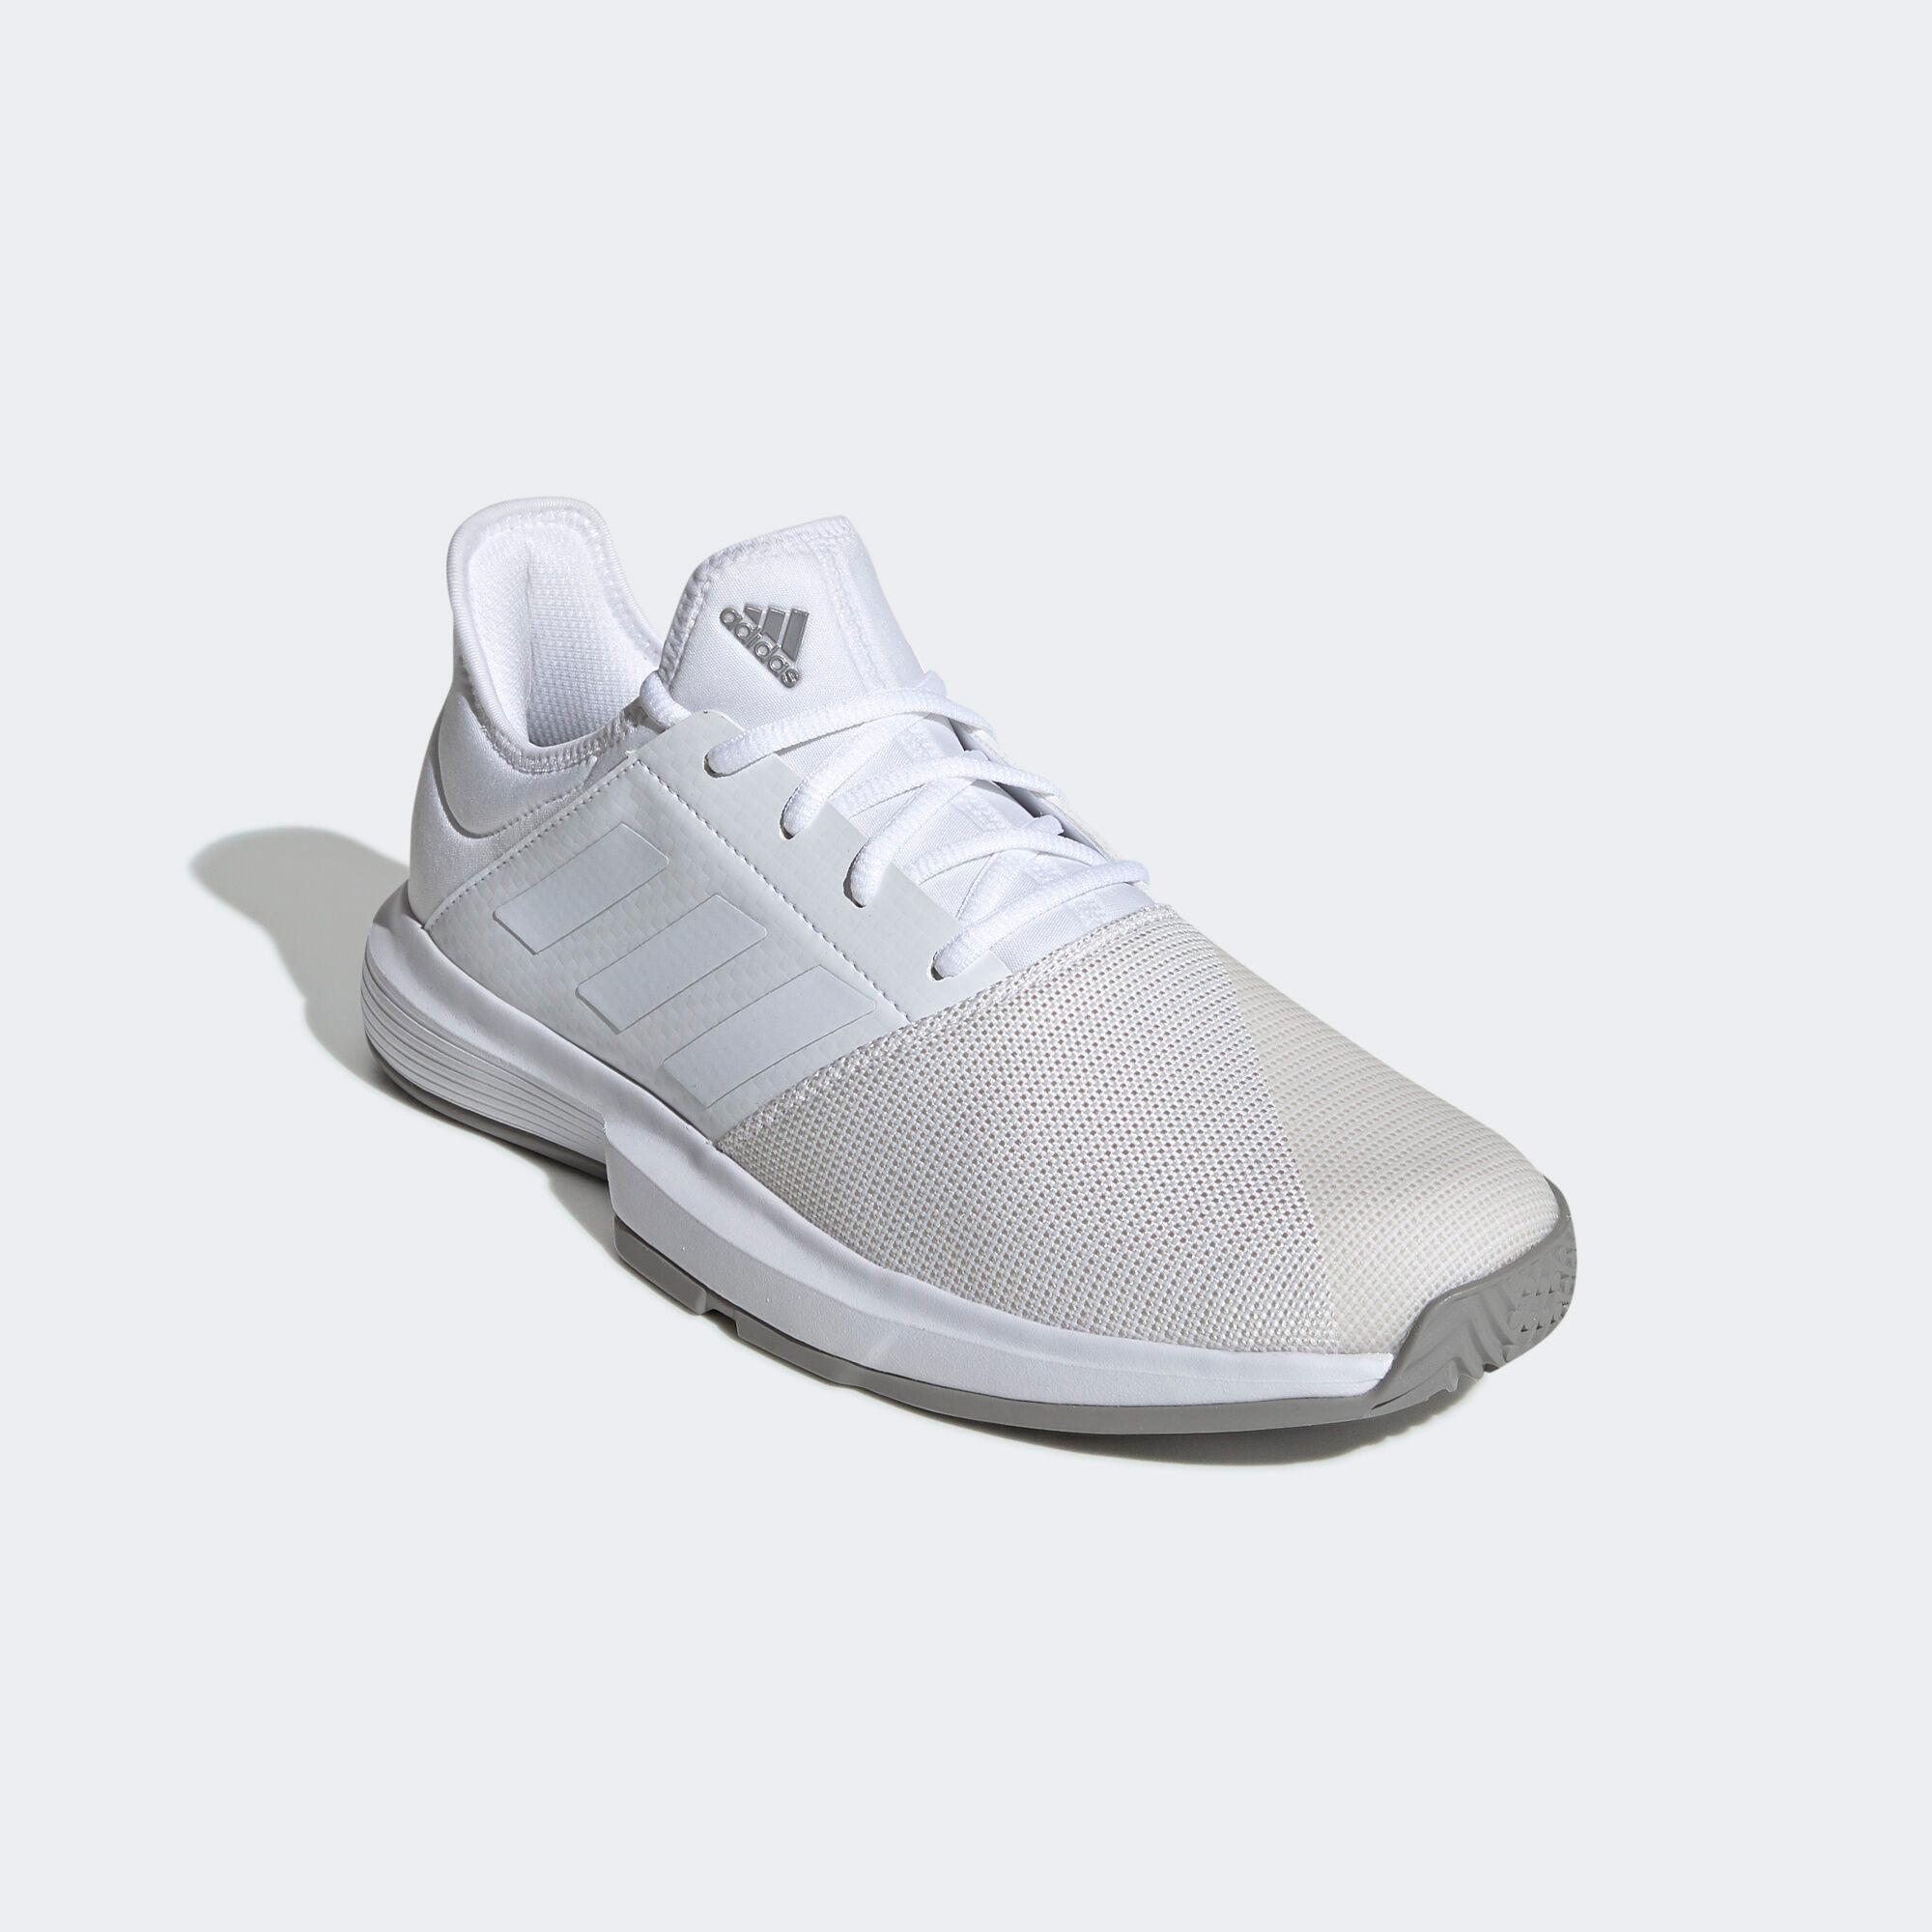 Adidas Mens GameCourt Tennis Shoes - White/Grey - Tennisnuts.com